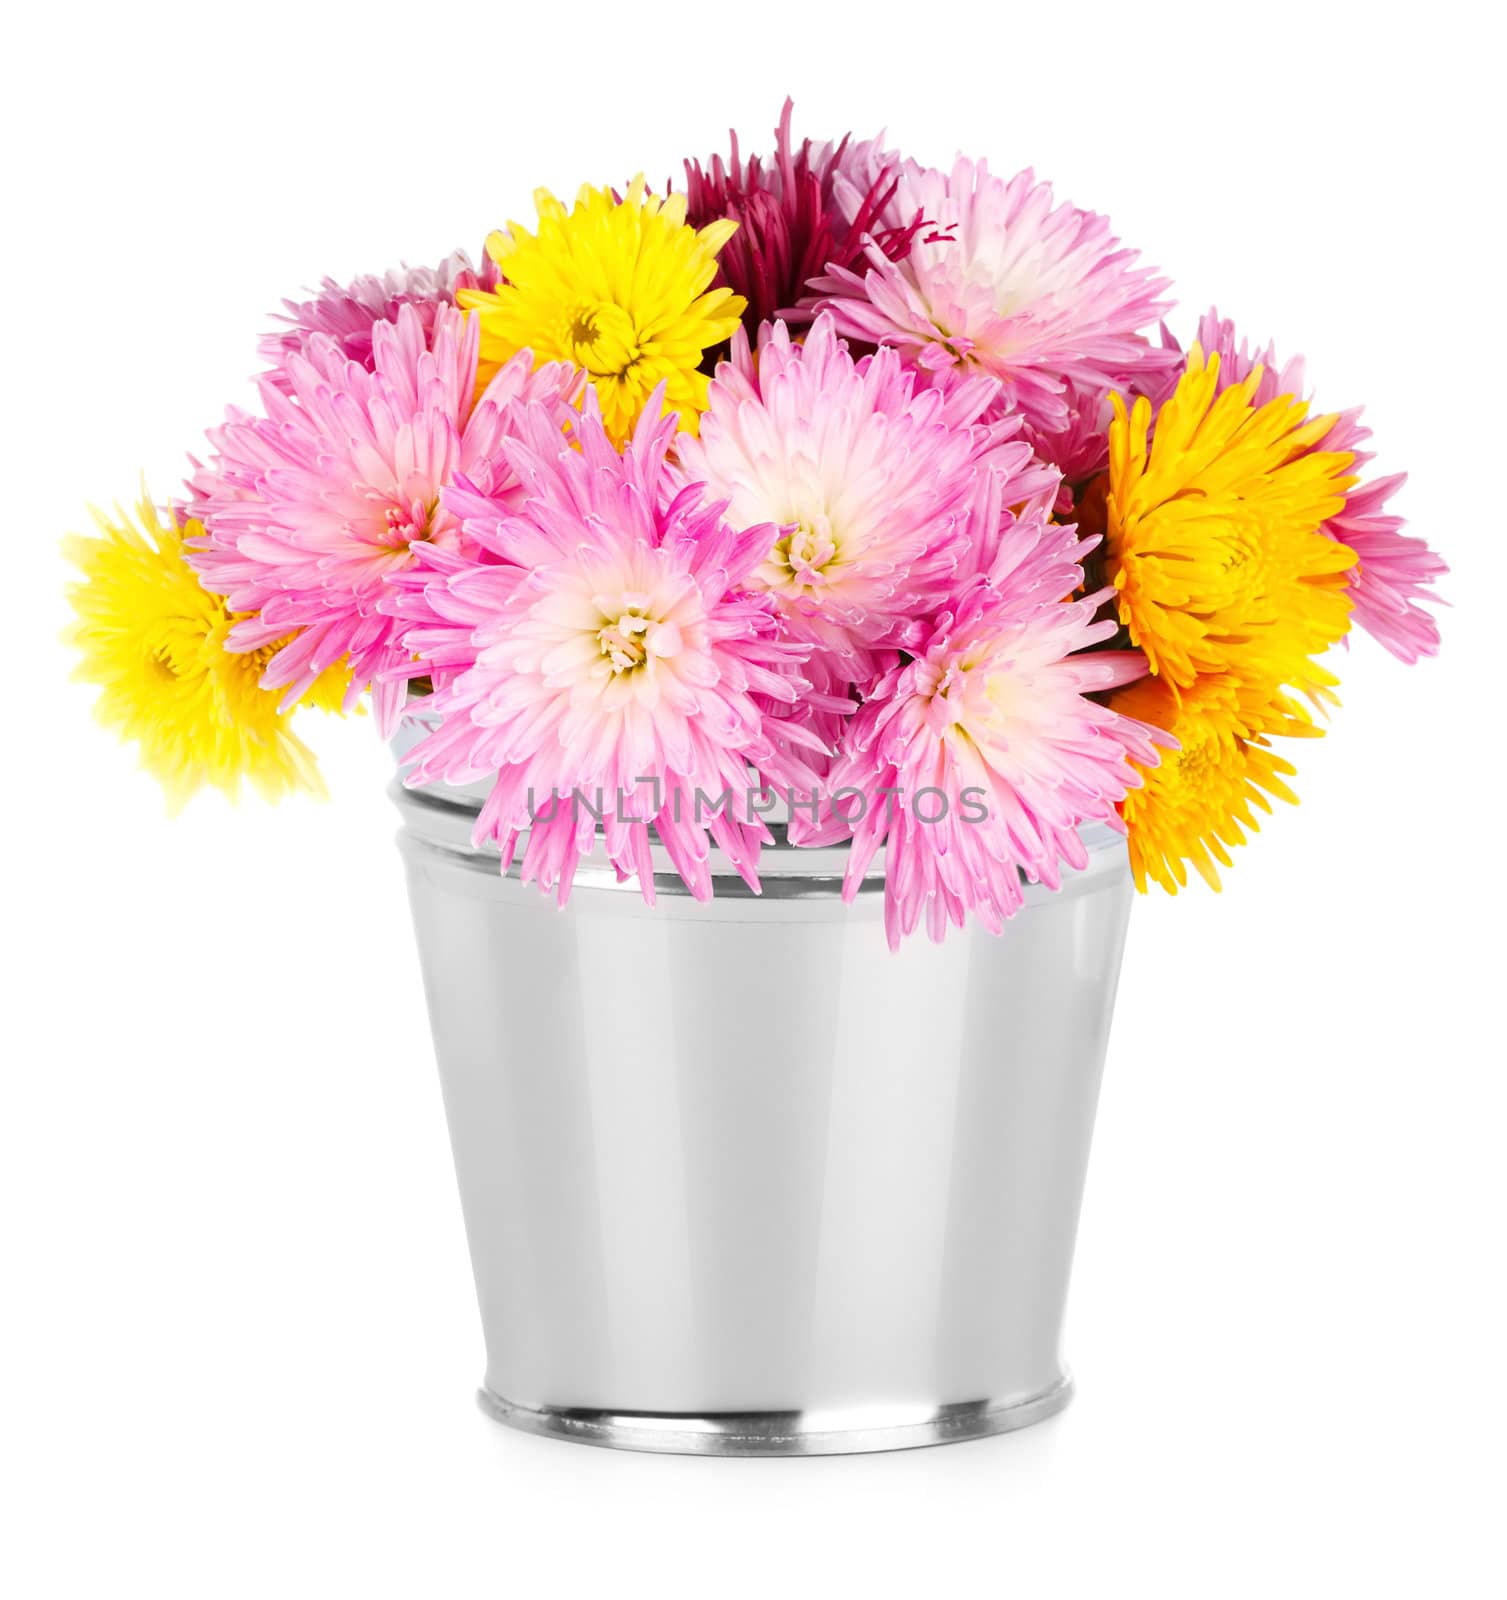 Chrysanthemum in bucket on white background by Bedolaga